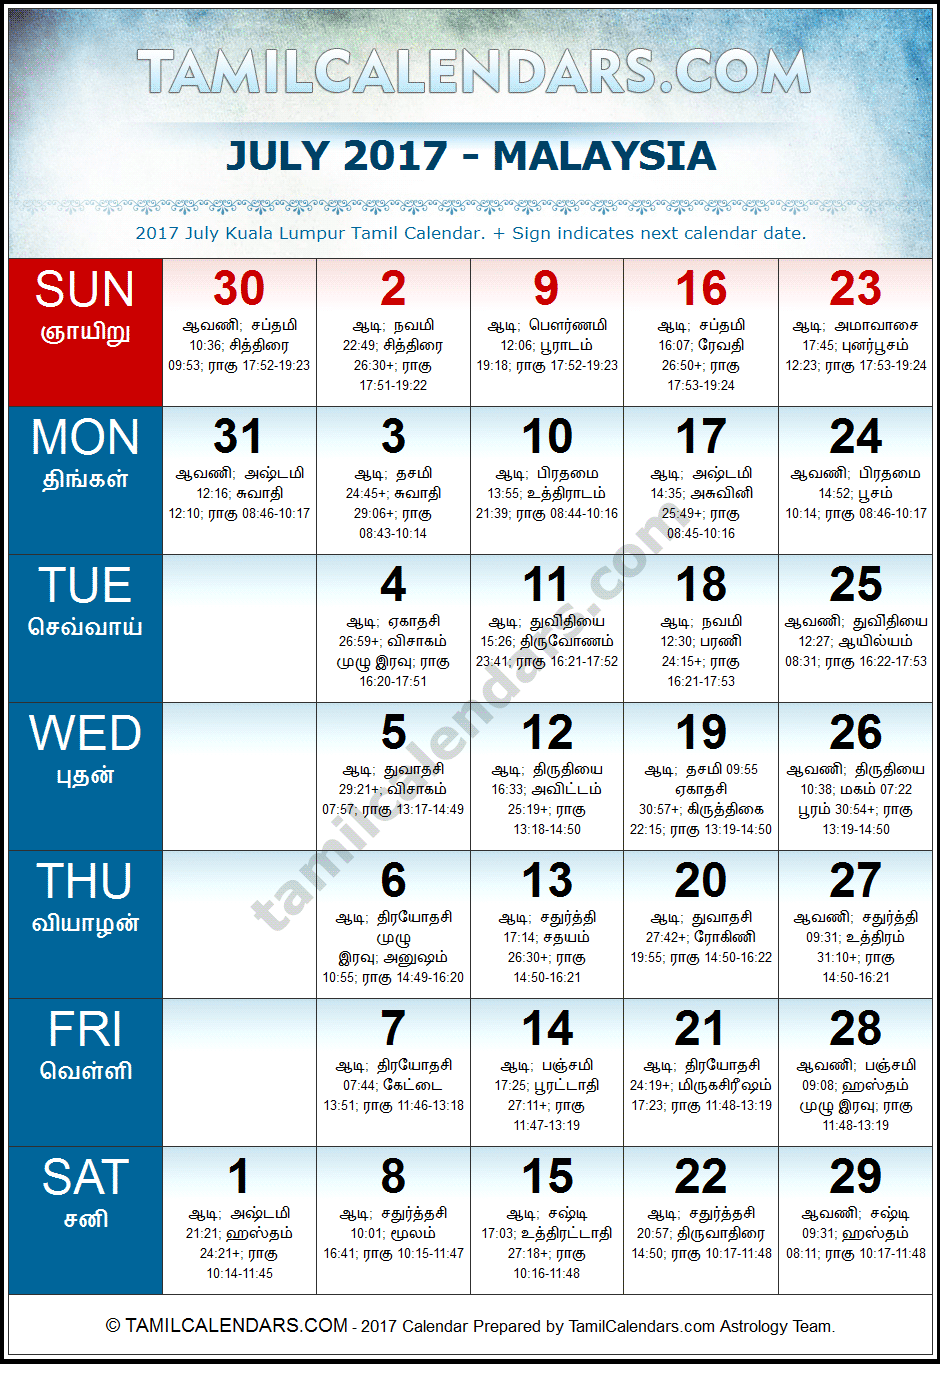 July 2017 Tamil Calendar for Malaysia (Kuala Lumpur)